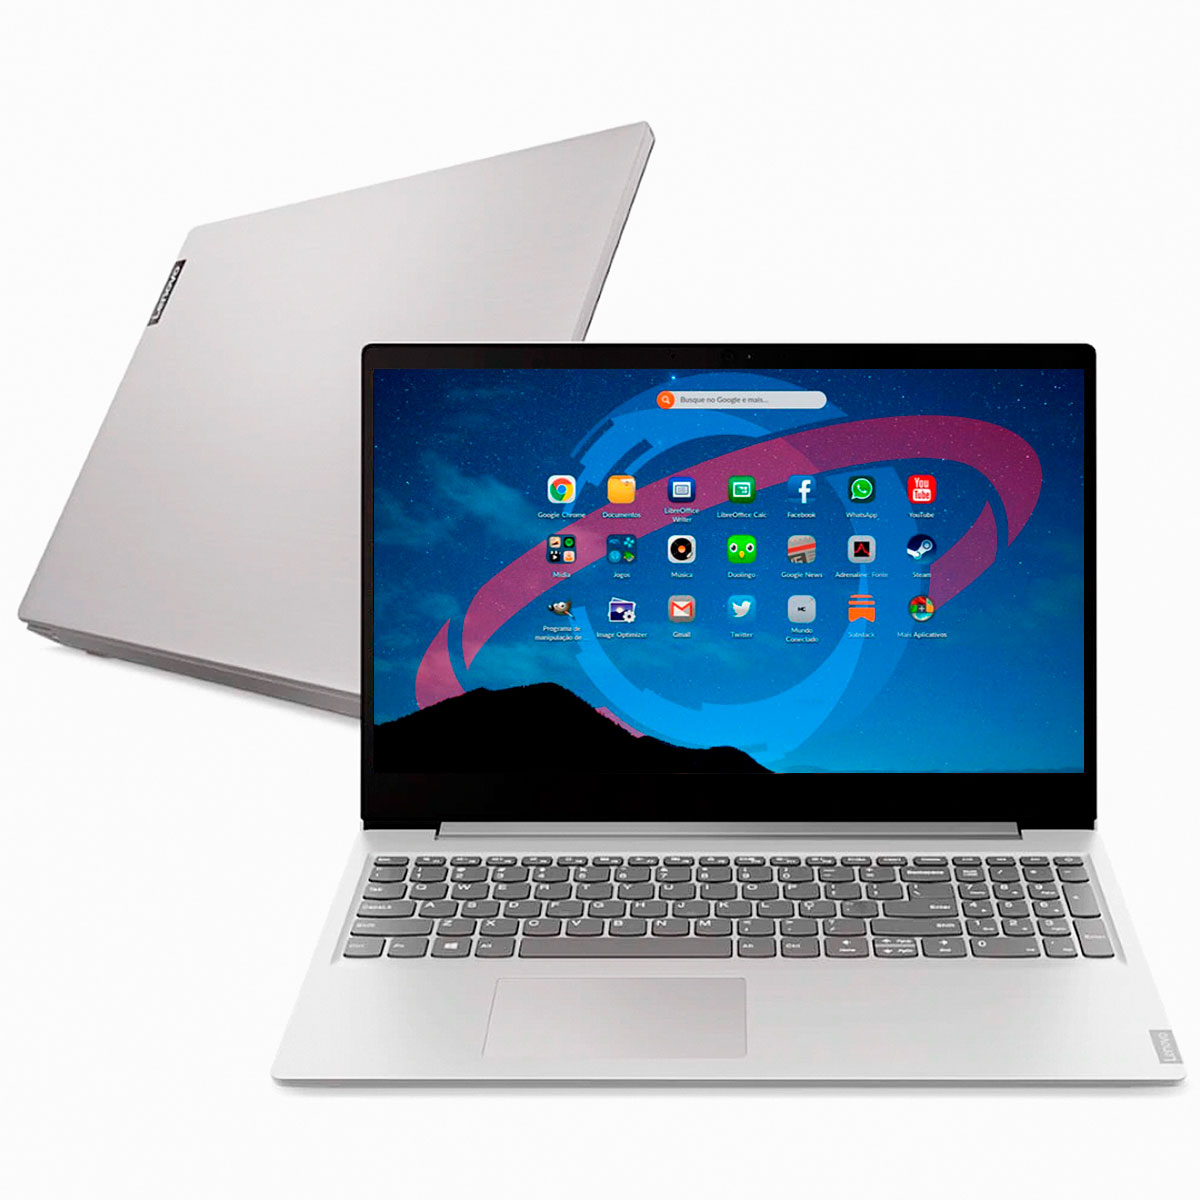 Notebook Lenovo Ideapad S145 - Intel i3 8130U, RAM 4GB, HD 1TB, Tela 15.6